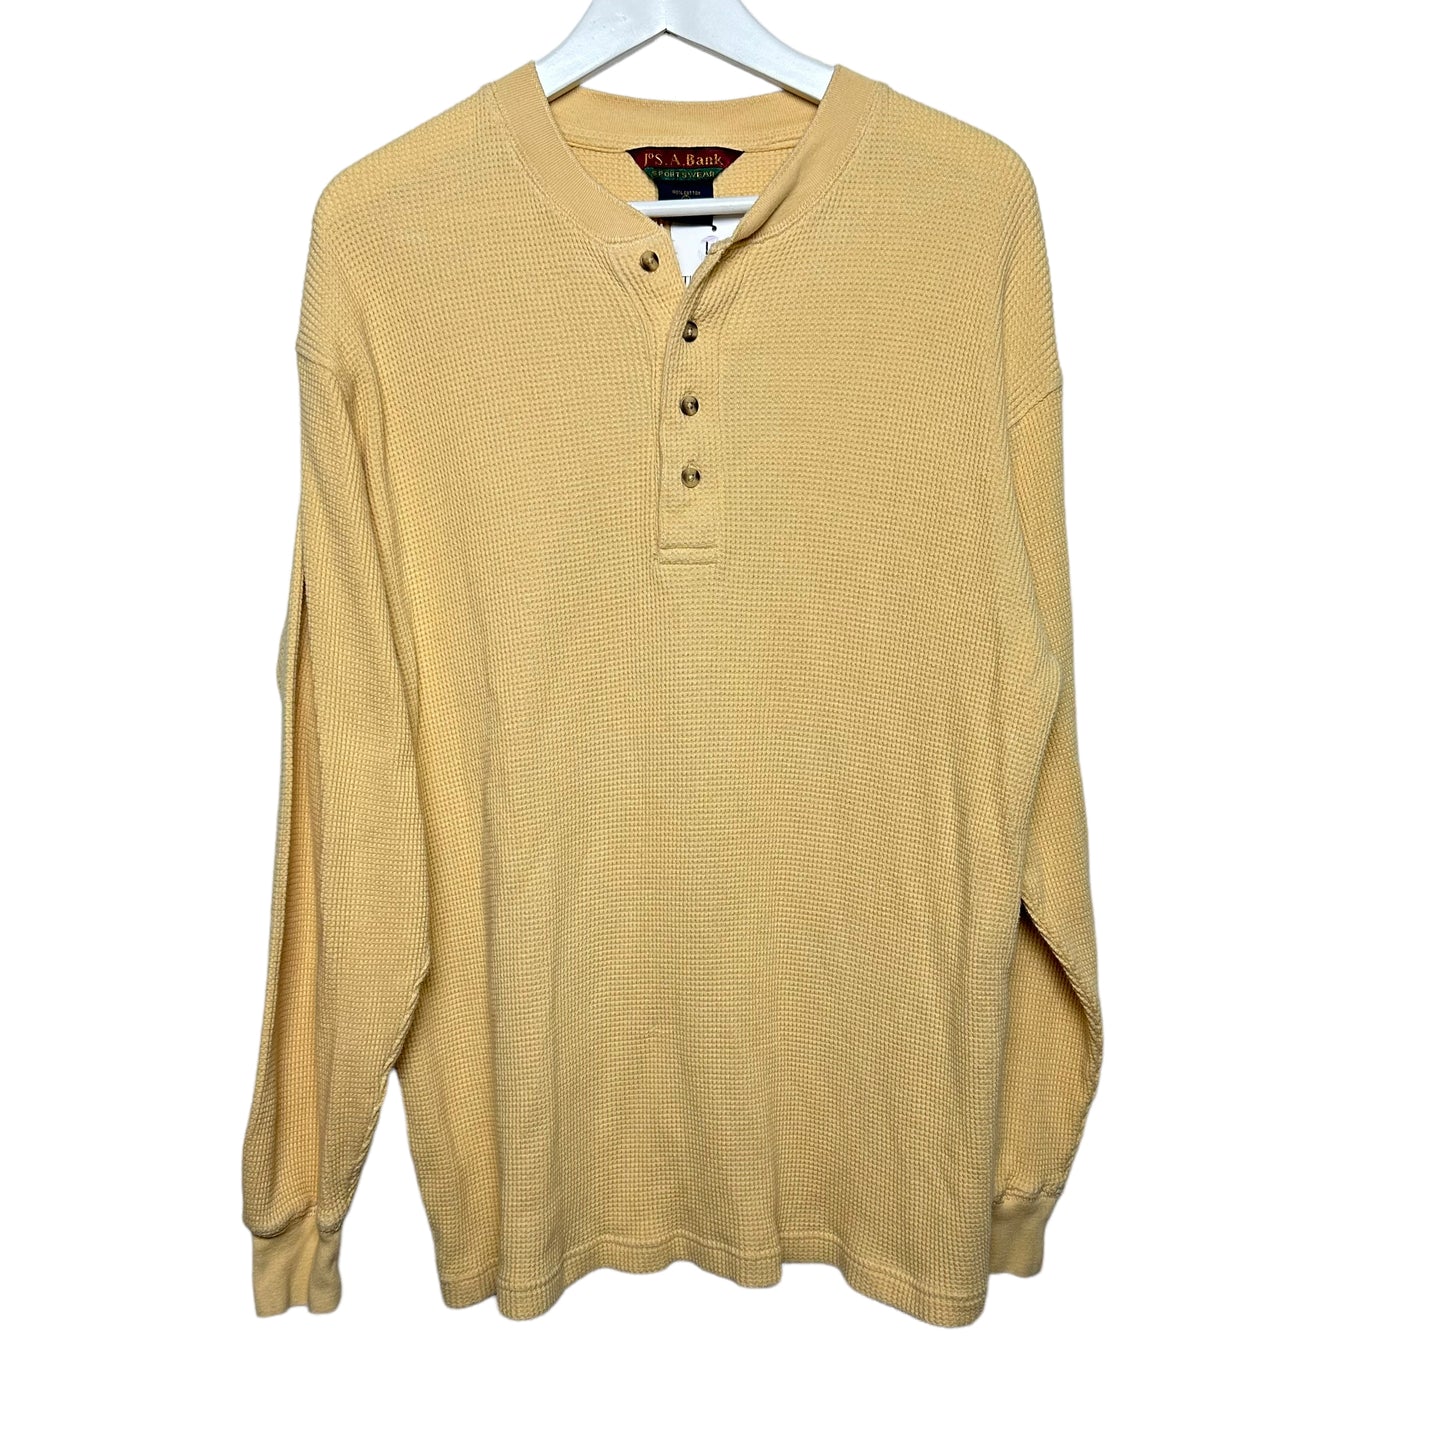 Vintage 90s Jos A Bank Thermal Shirt Waffle Knit Yellow Henley Cotton Medium